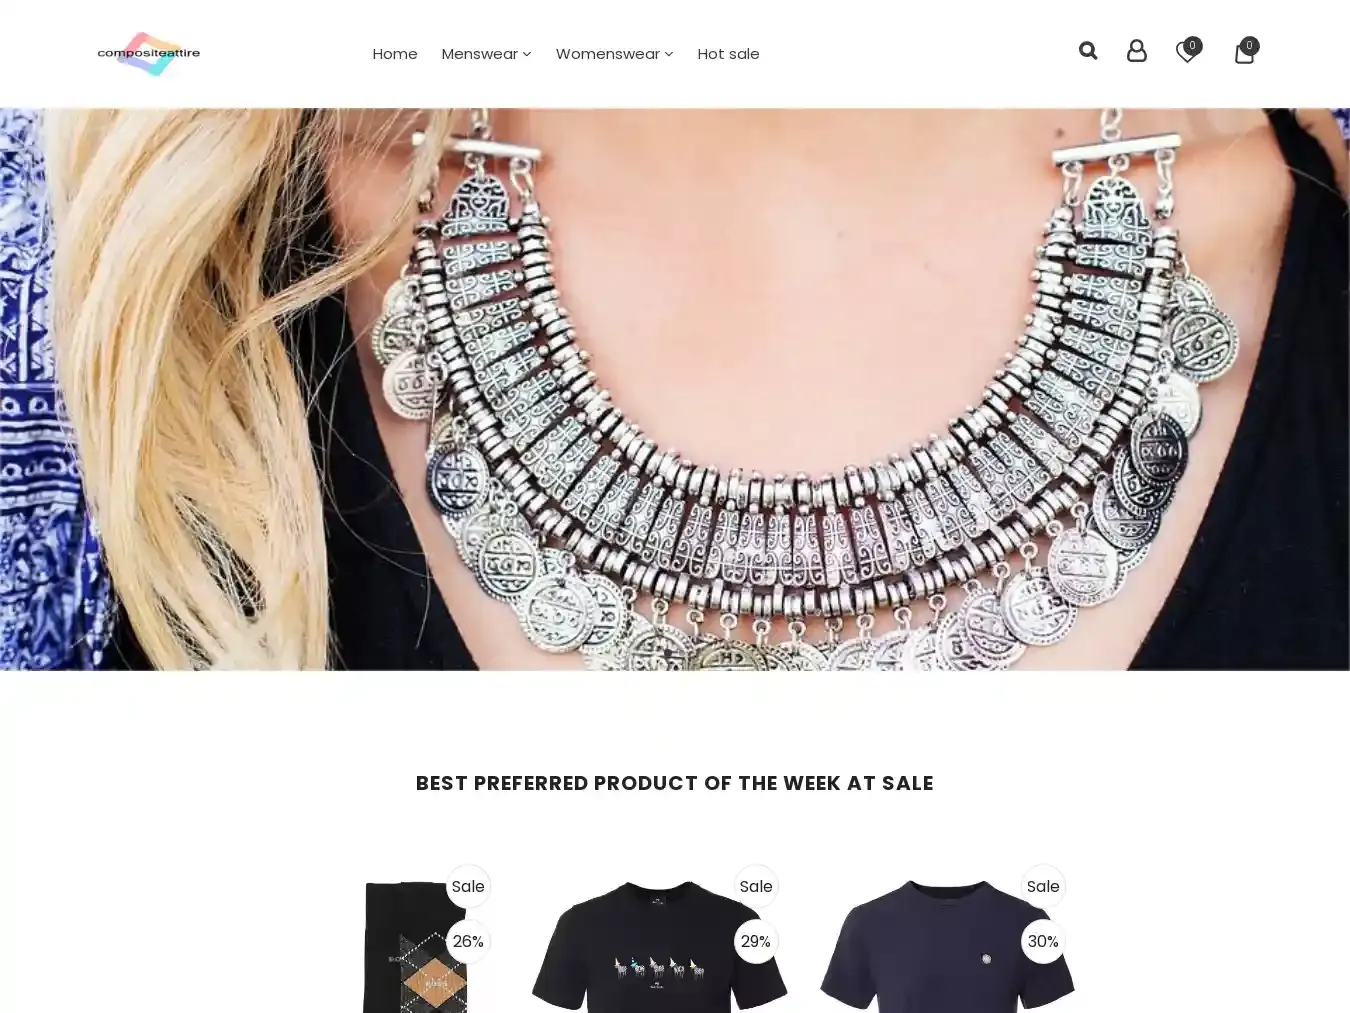 Compositeattire.com Fraudulent Fashion website.